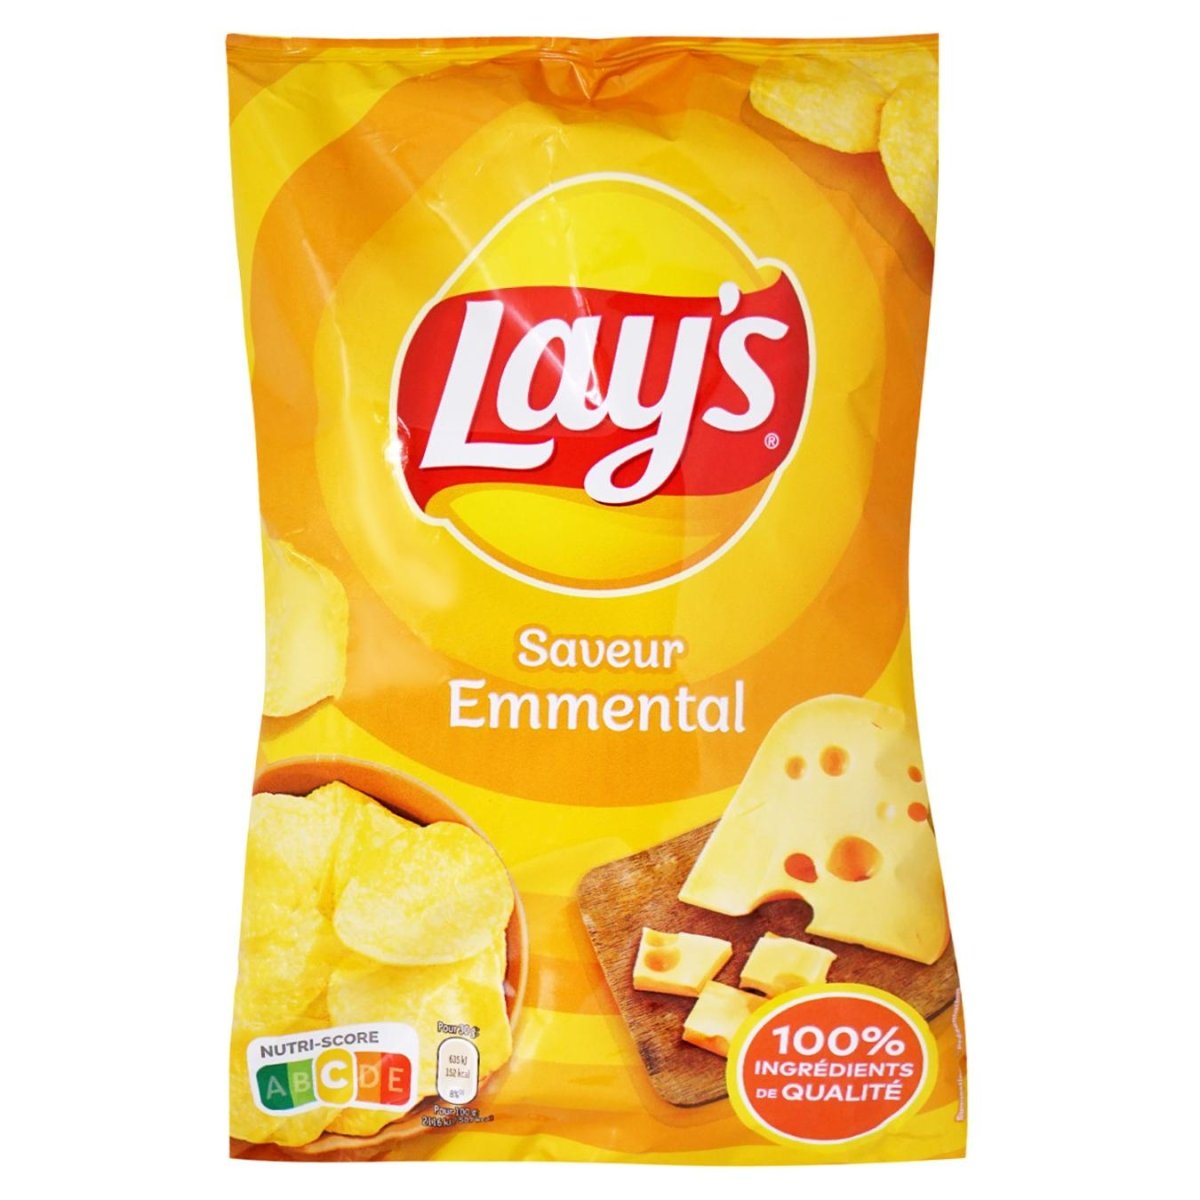 Lay's Crisps Emmental (France) 75g - Candy Mail UK